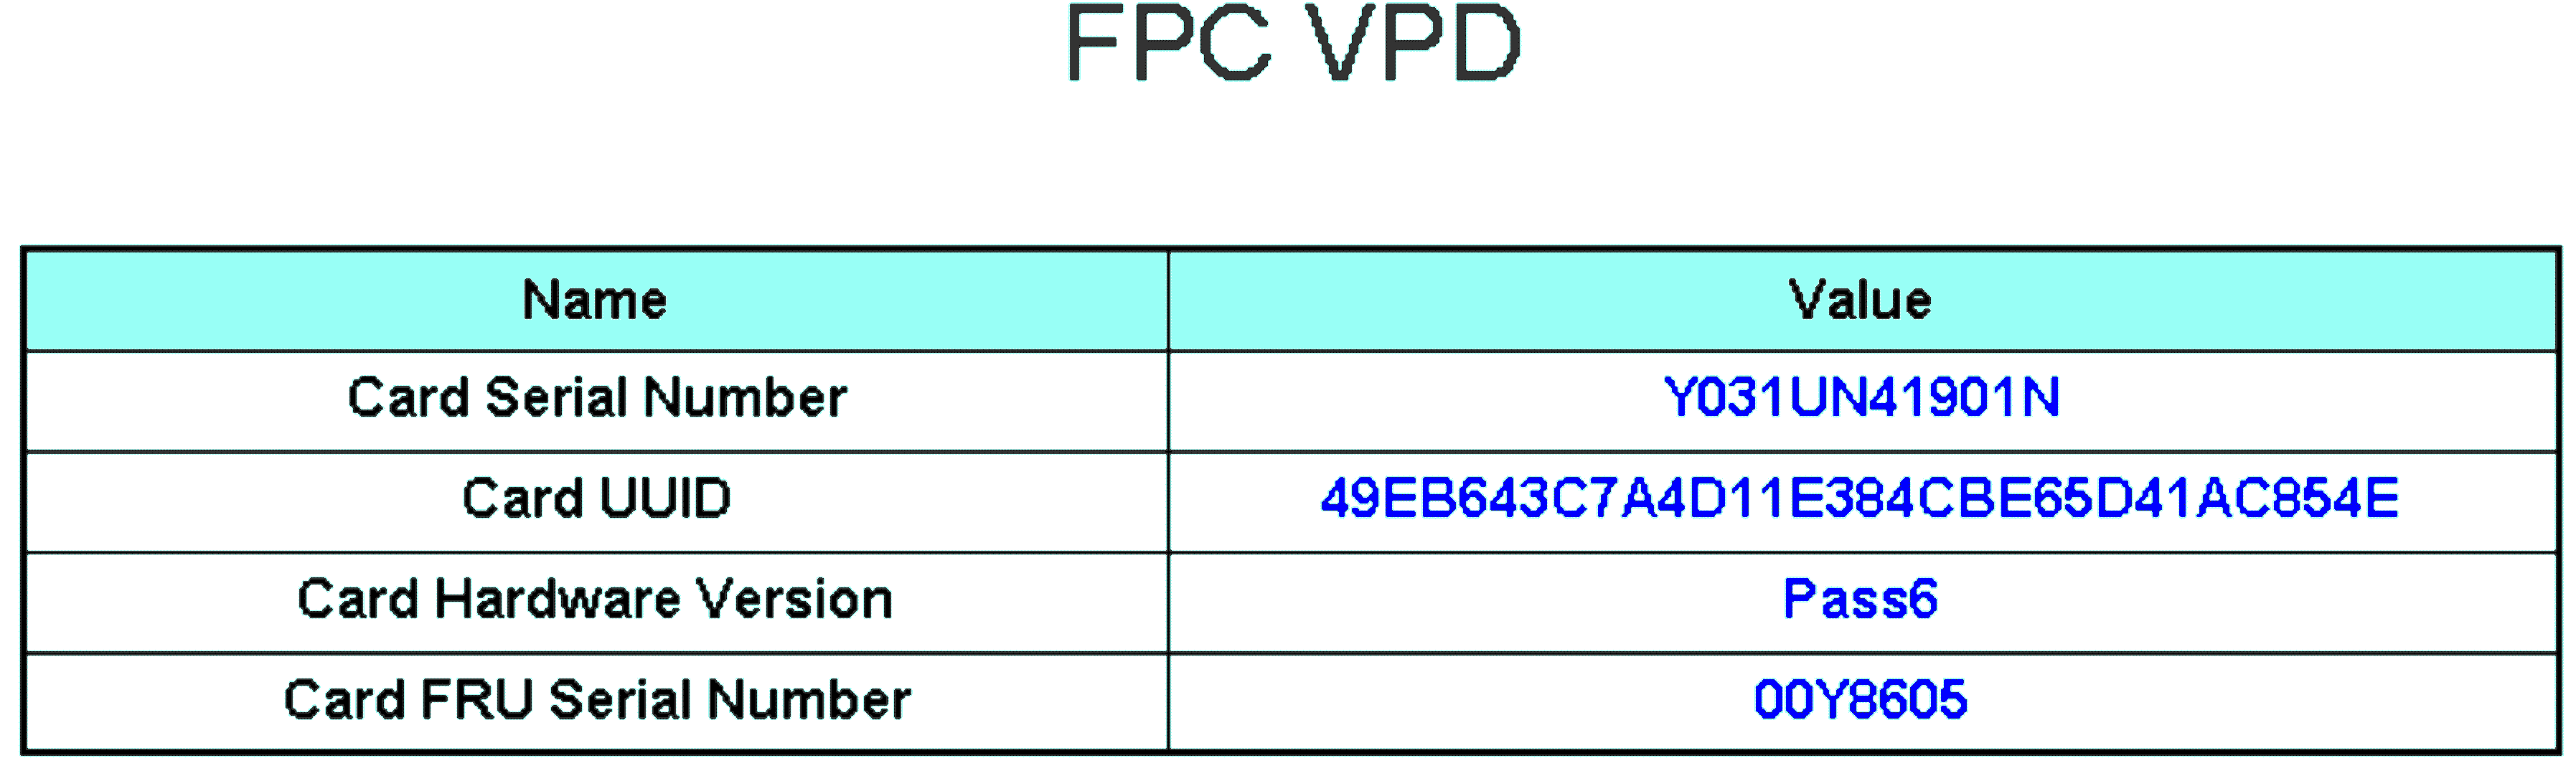 FPC VPD